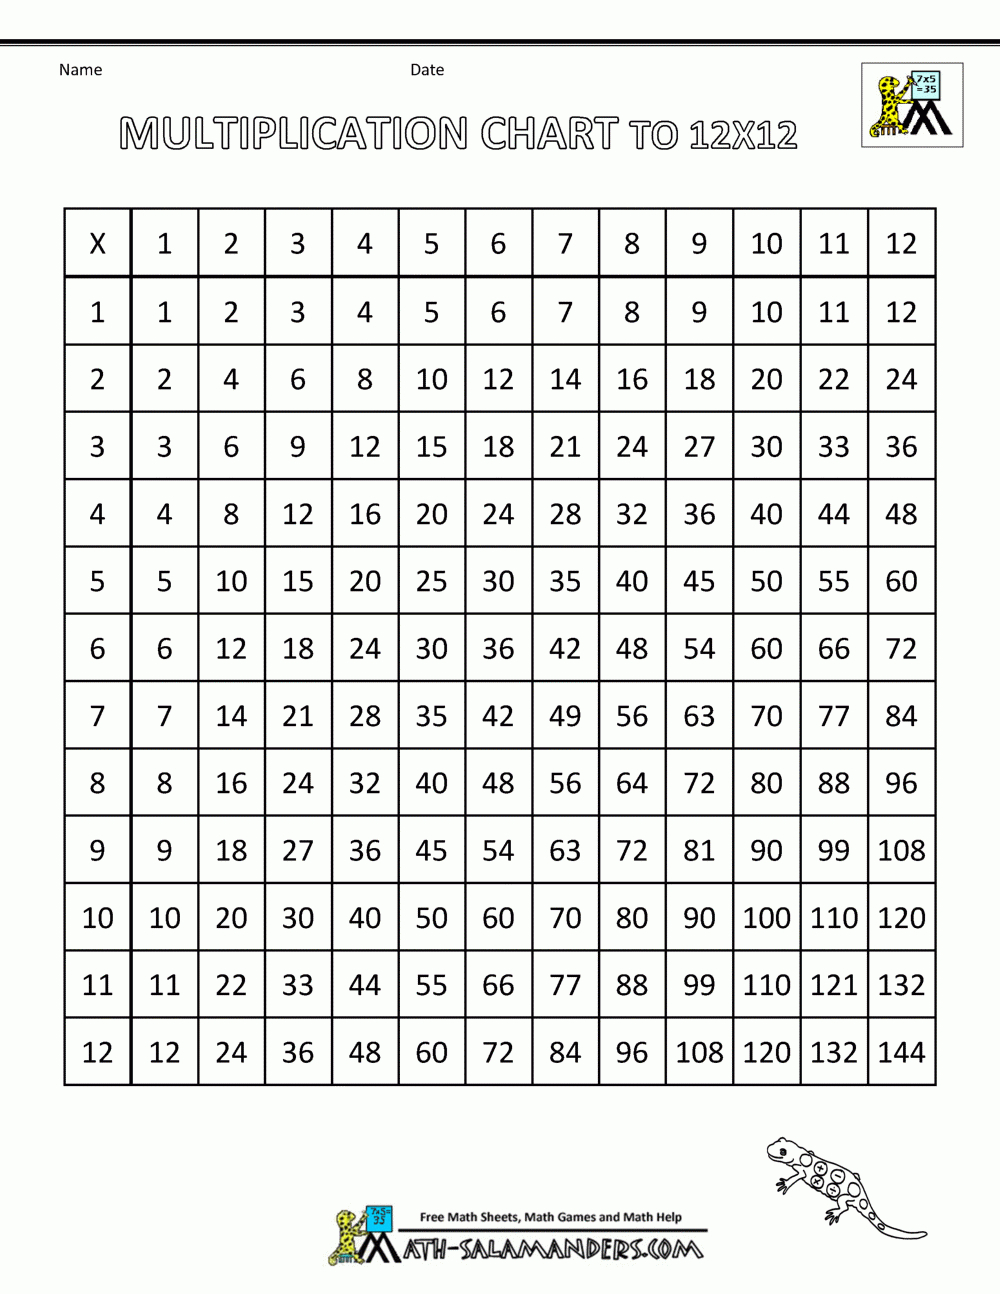 Printable Multiplication Table 1-12 Pdf | PrintableMultiplication.com